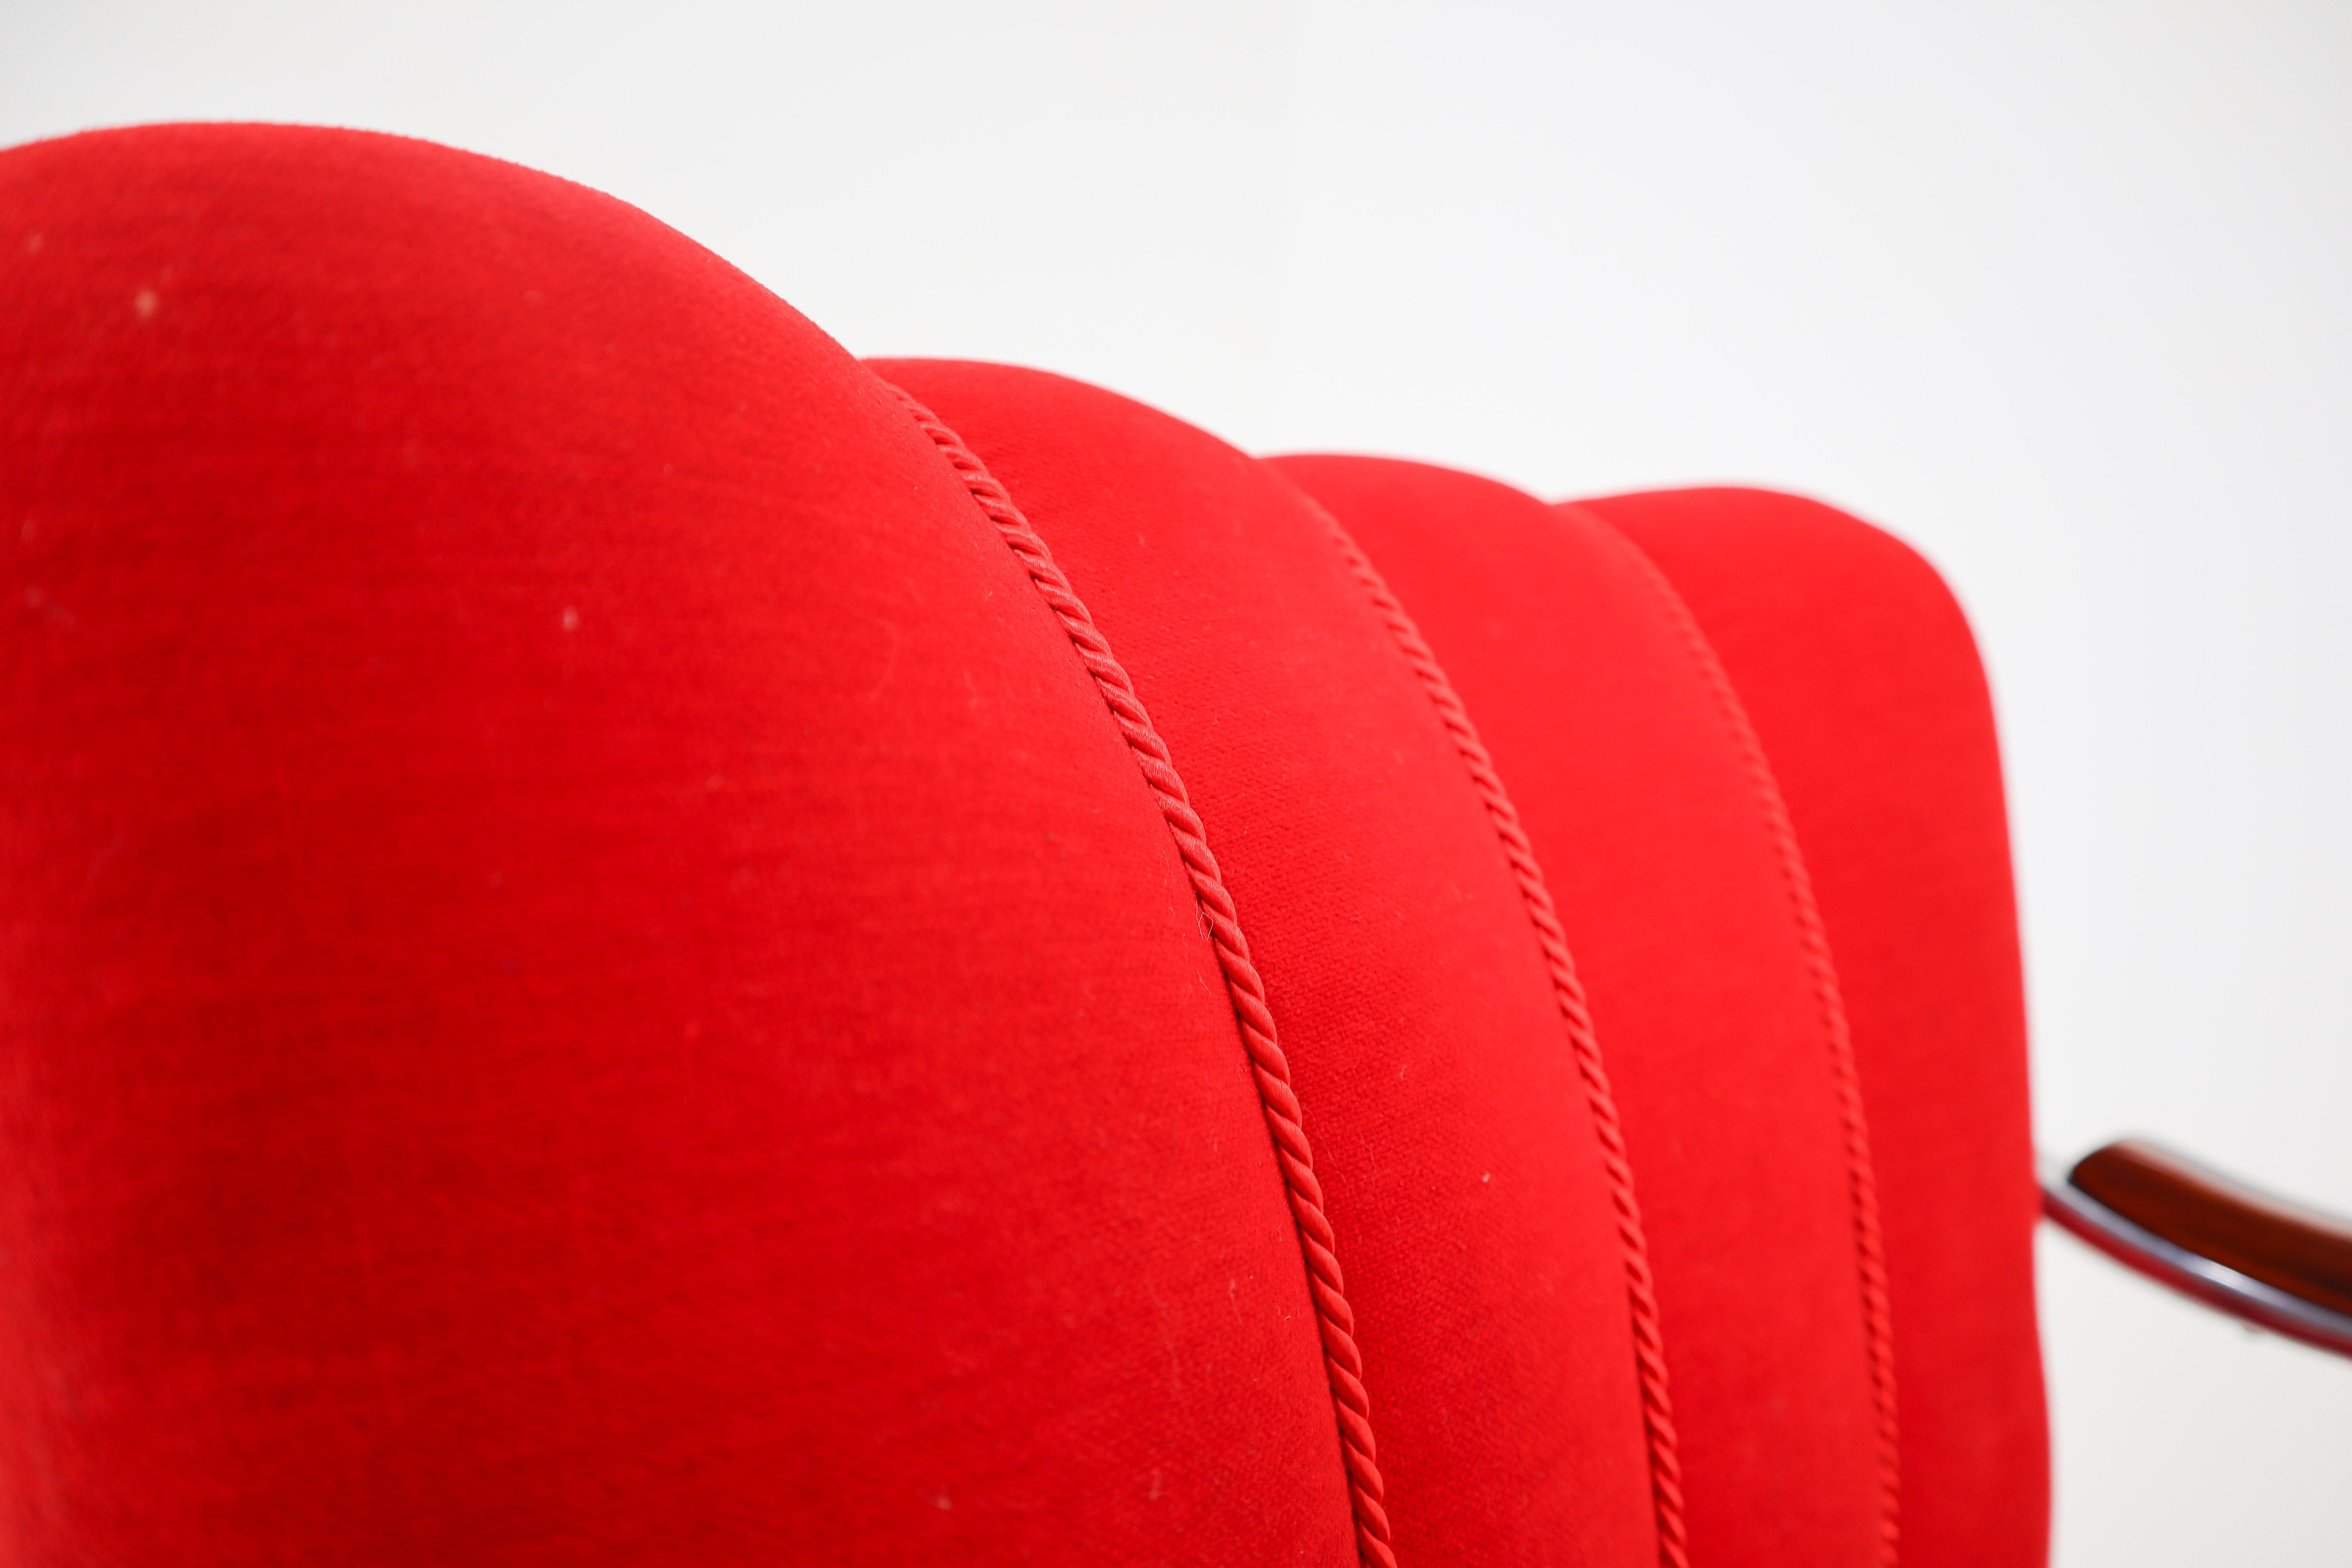 Velvet Armchairs by Thonet circa 1920s Midcentury Bauhaus Period in Red Fabric